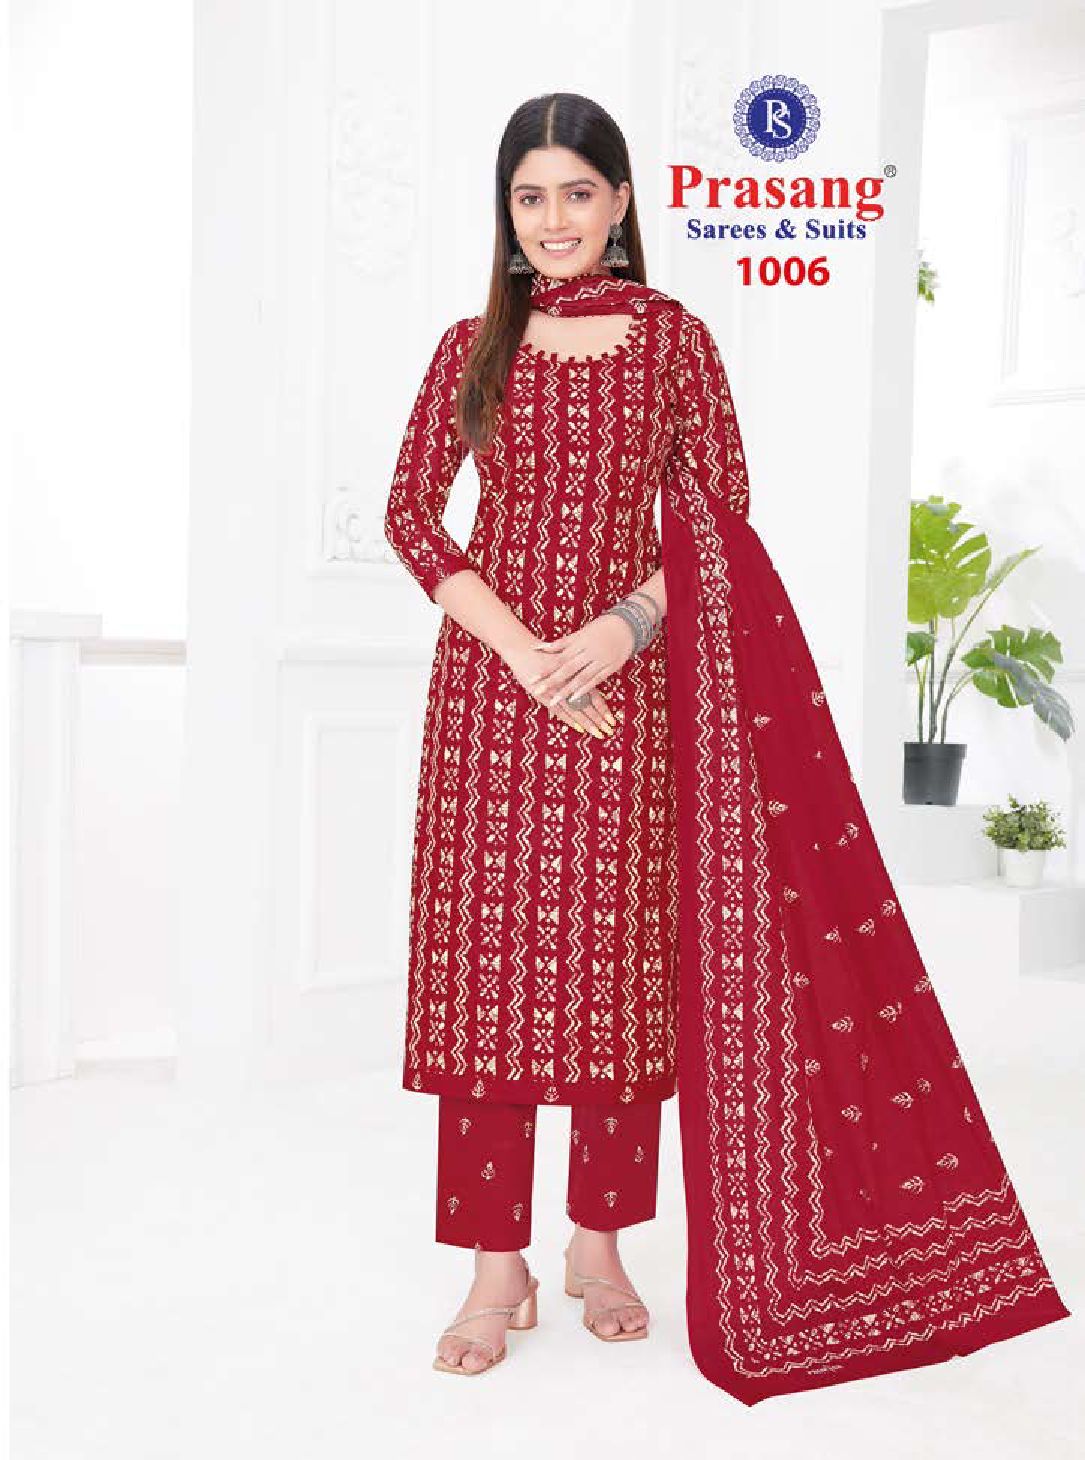 Prasang Madhur Vol-1 Wholesale Pure Cotton Printed Readymade Dress